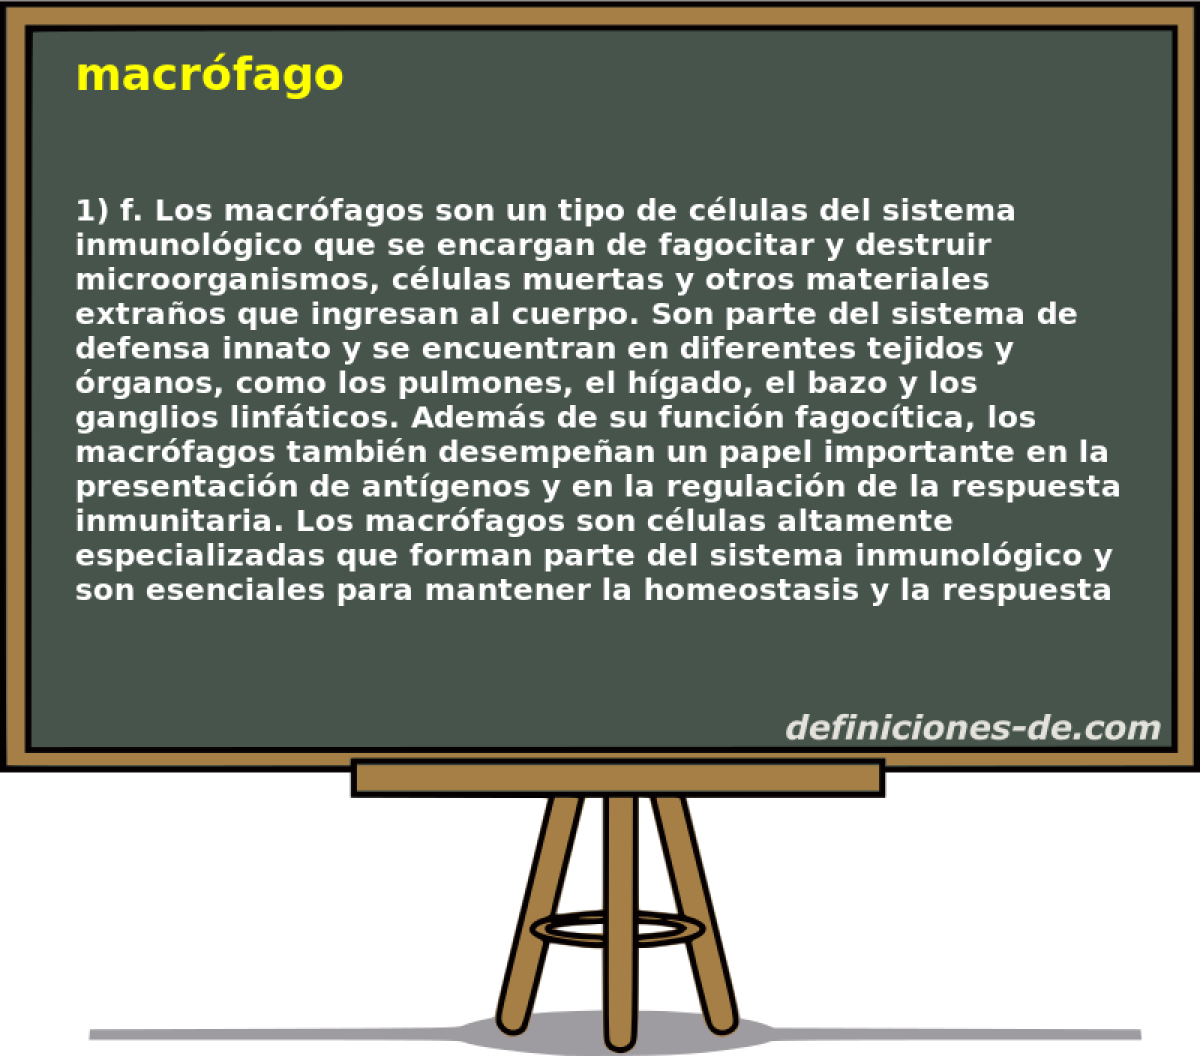 macrfago 